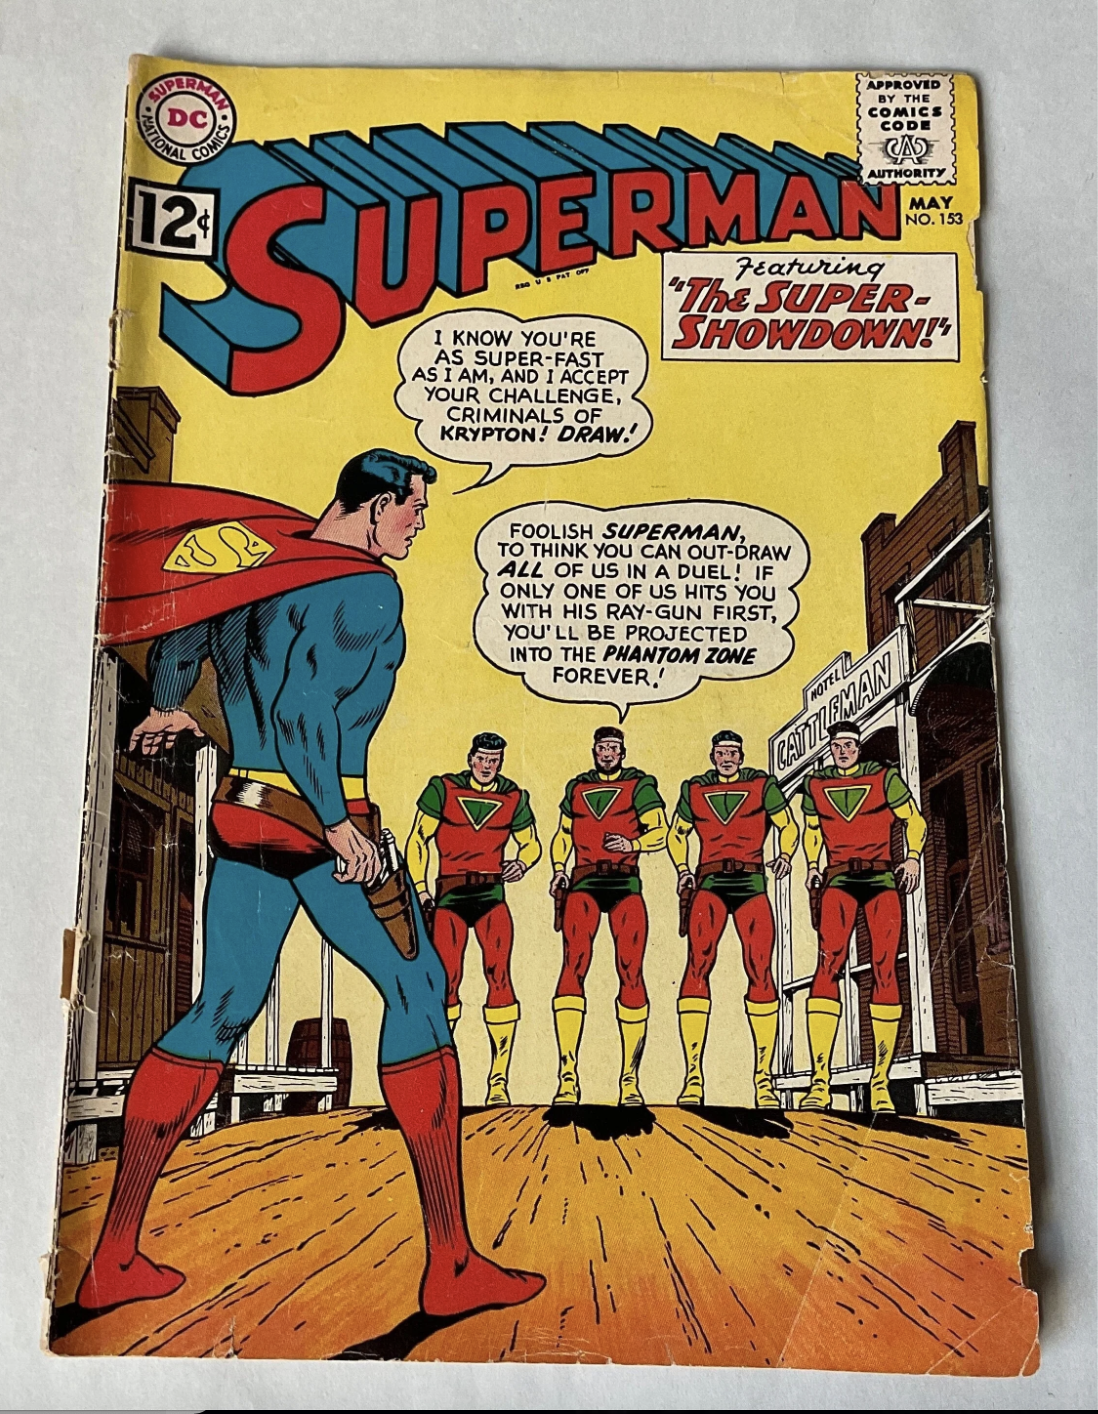 Superman Comic No. 153, May 1962. Featuring "The Super Showdown!"